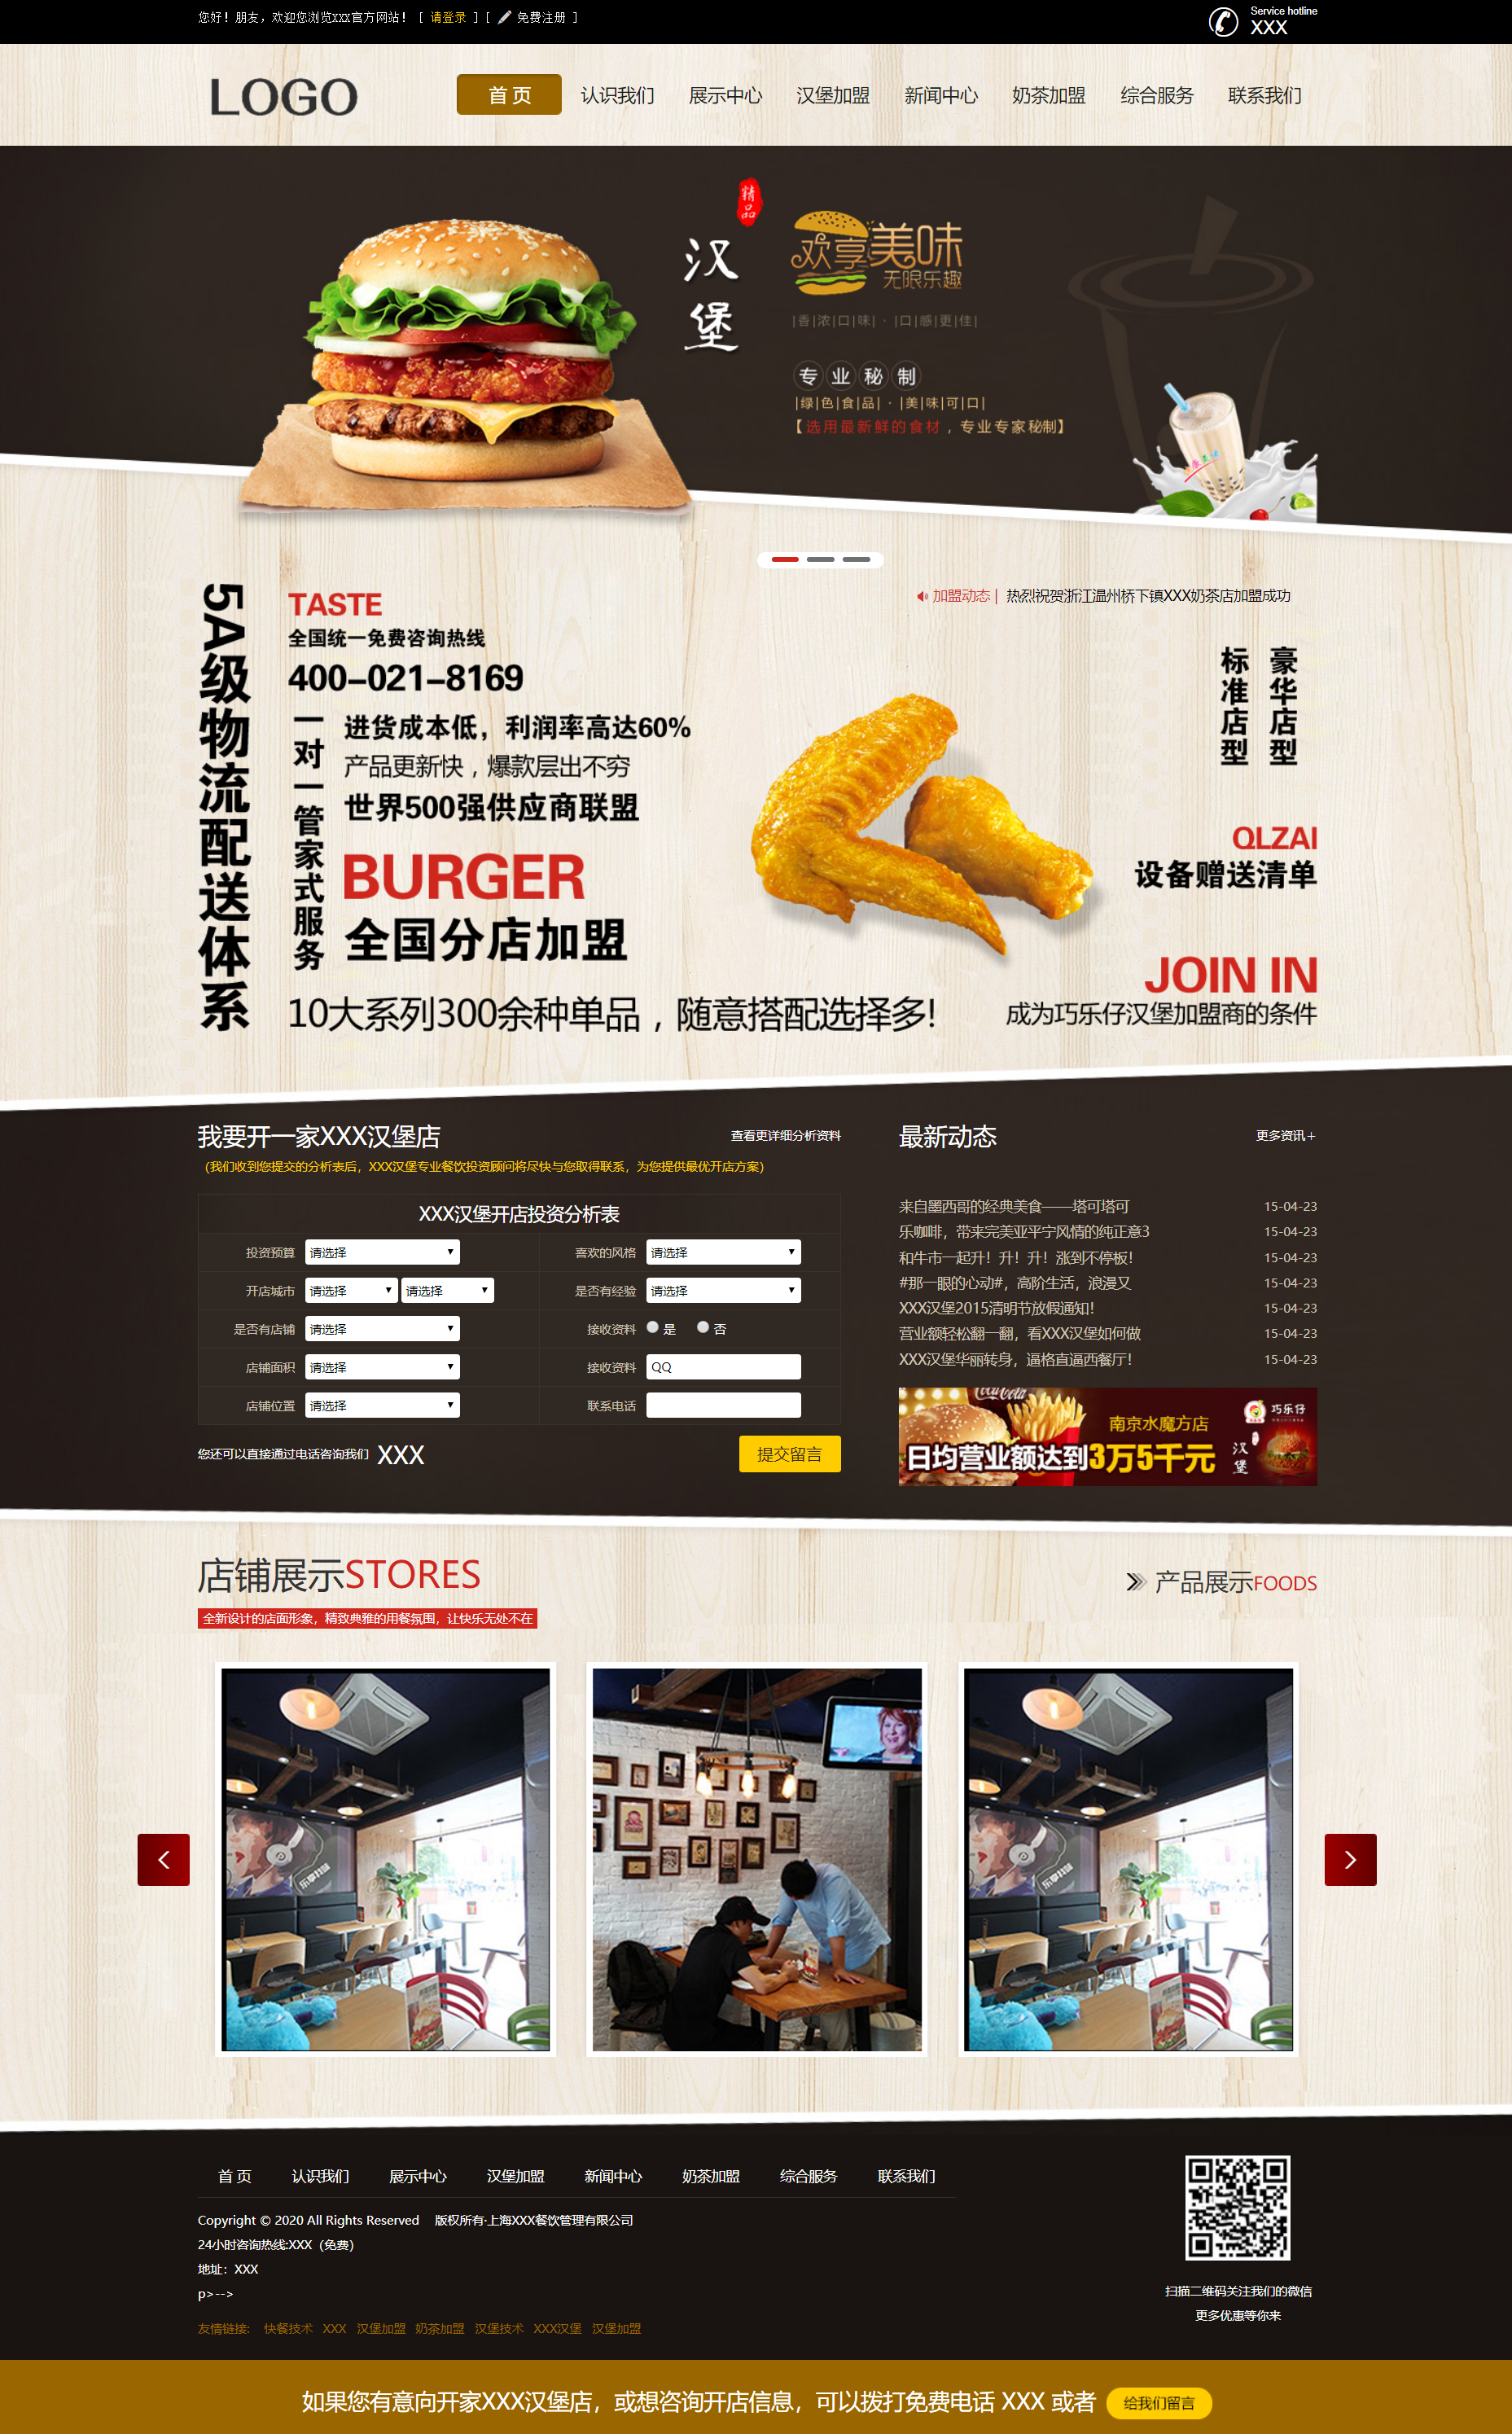 HTML5棕色精美样式汉堡店餐饮企业网站模板代码下载